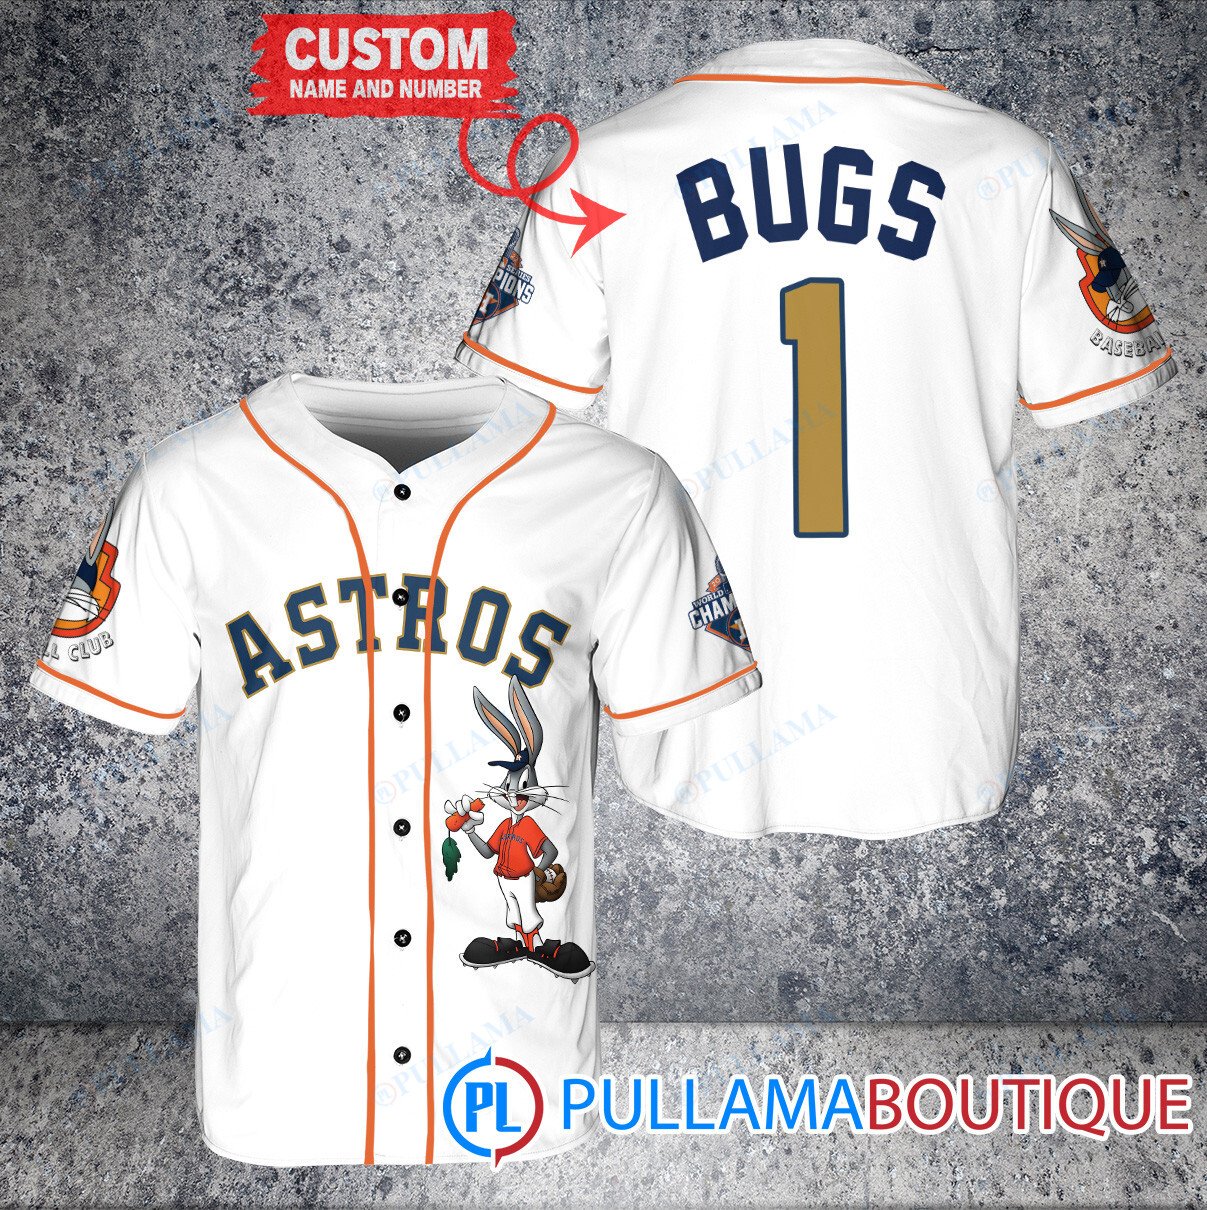 Customize Astros Jersey w/ Bugs Bunny